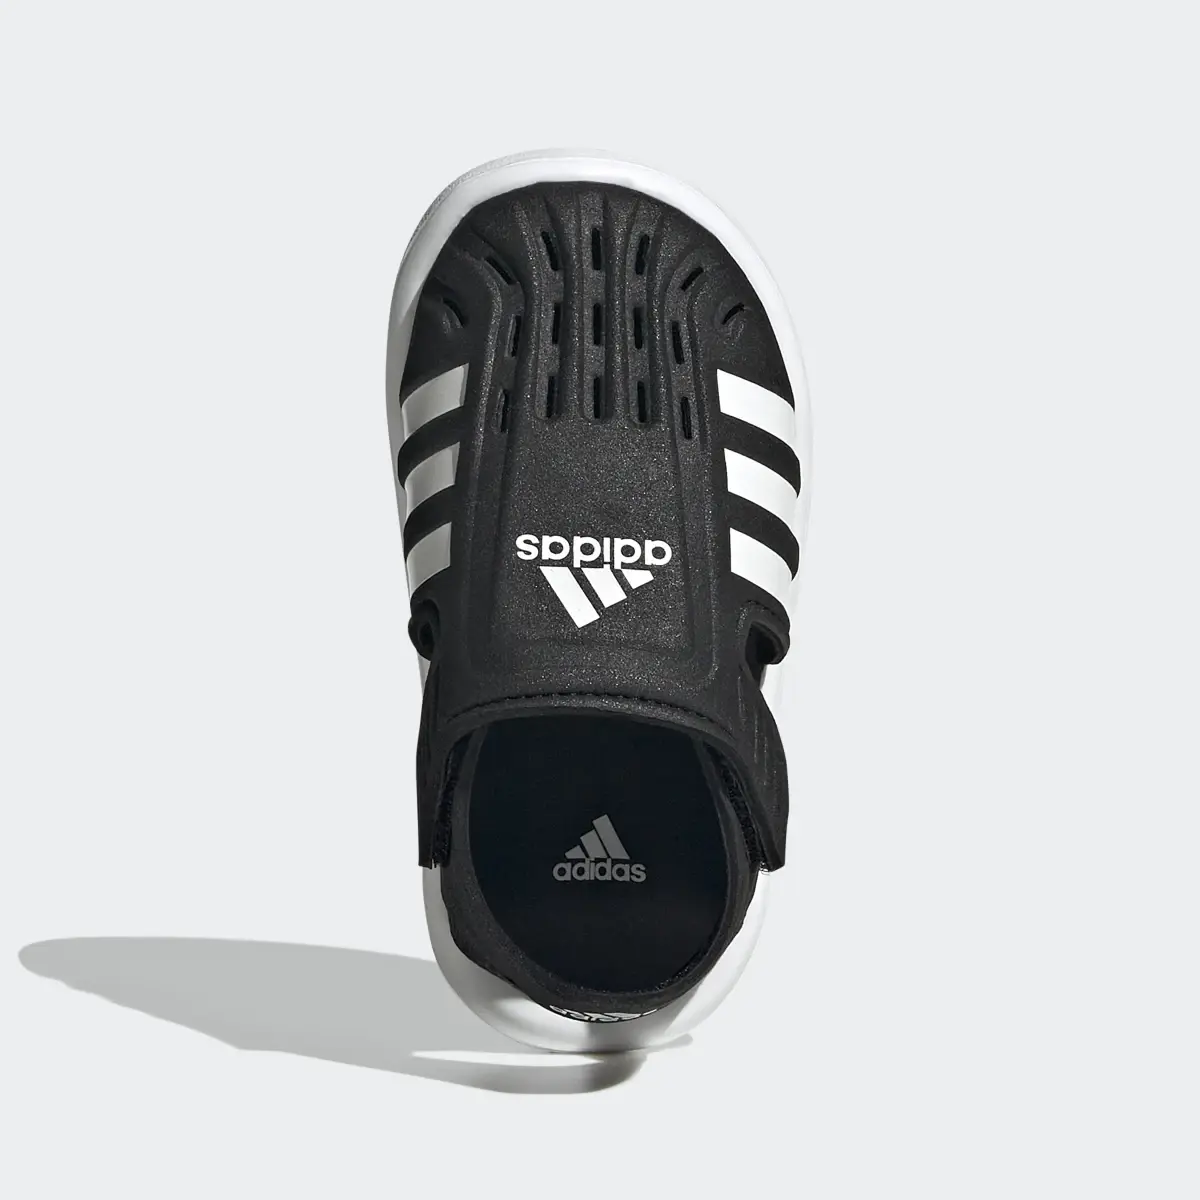 Adidas Sandalia Closed-Toe Summer Water. 3